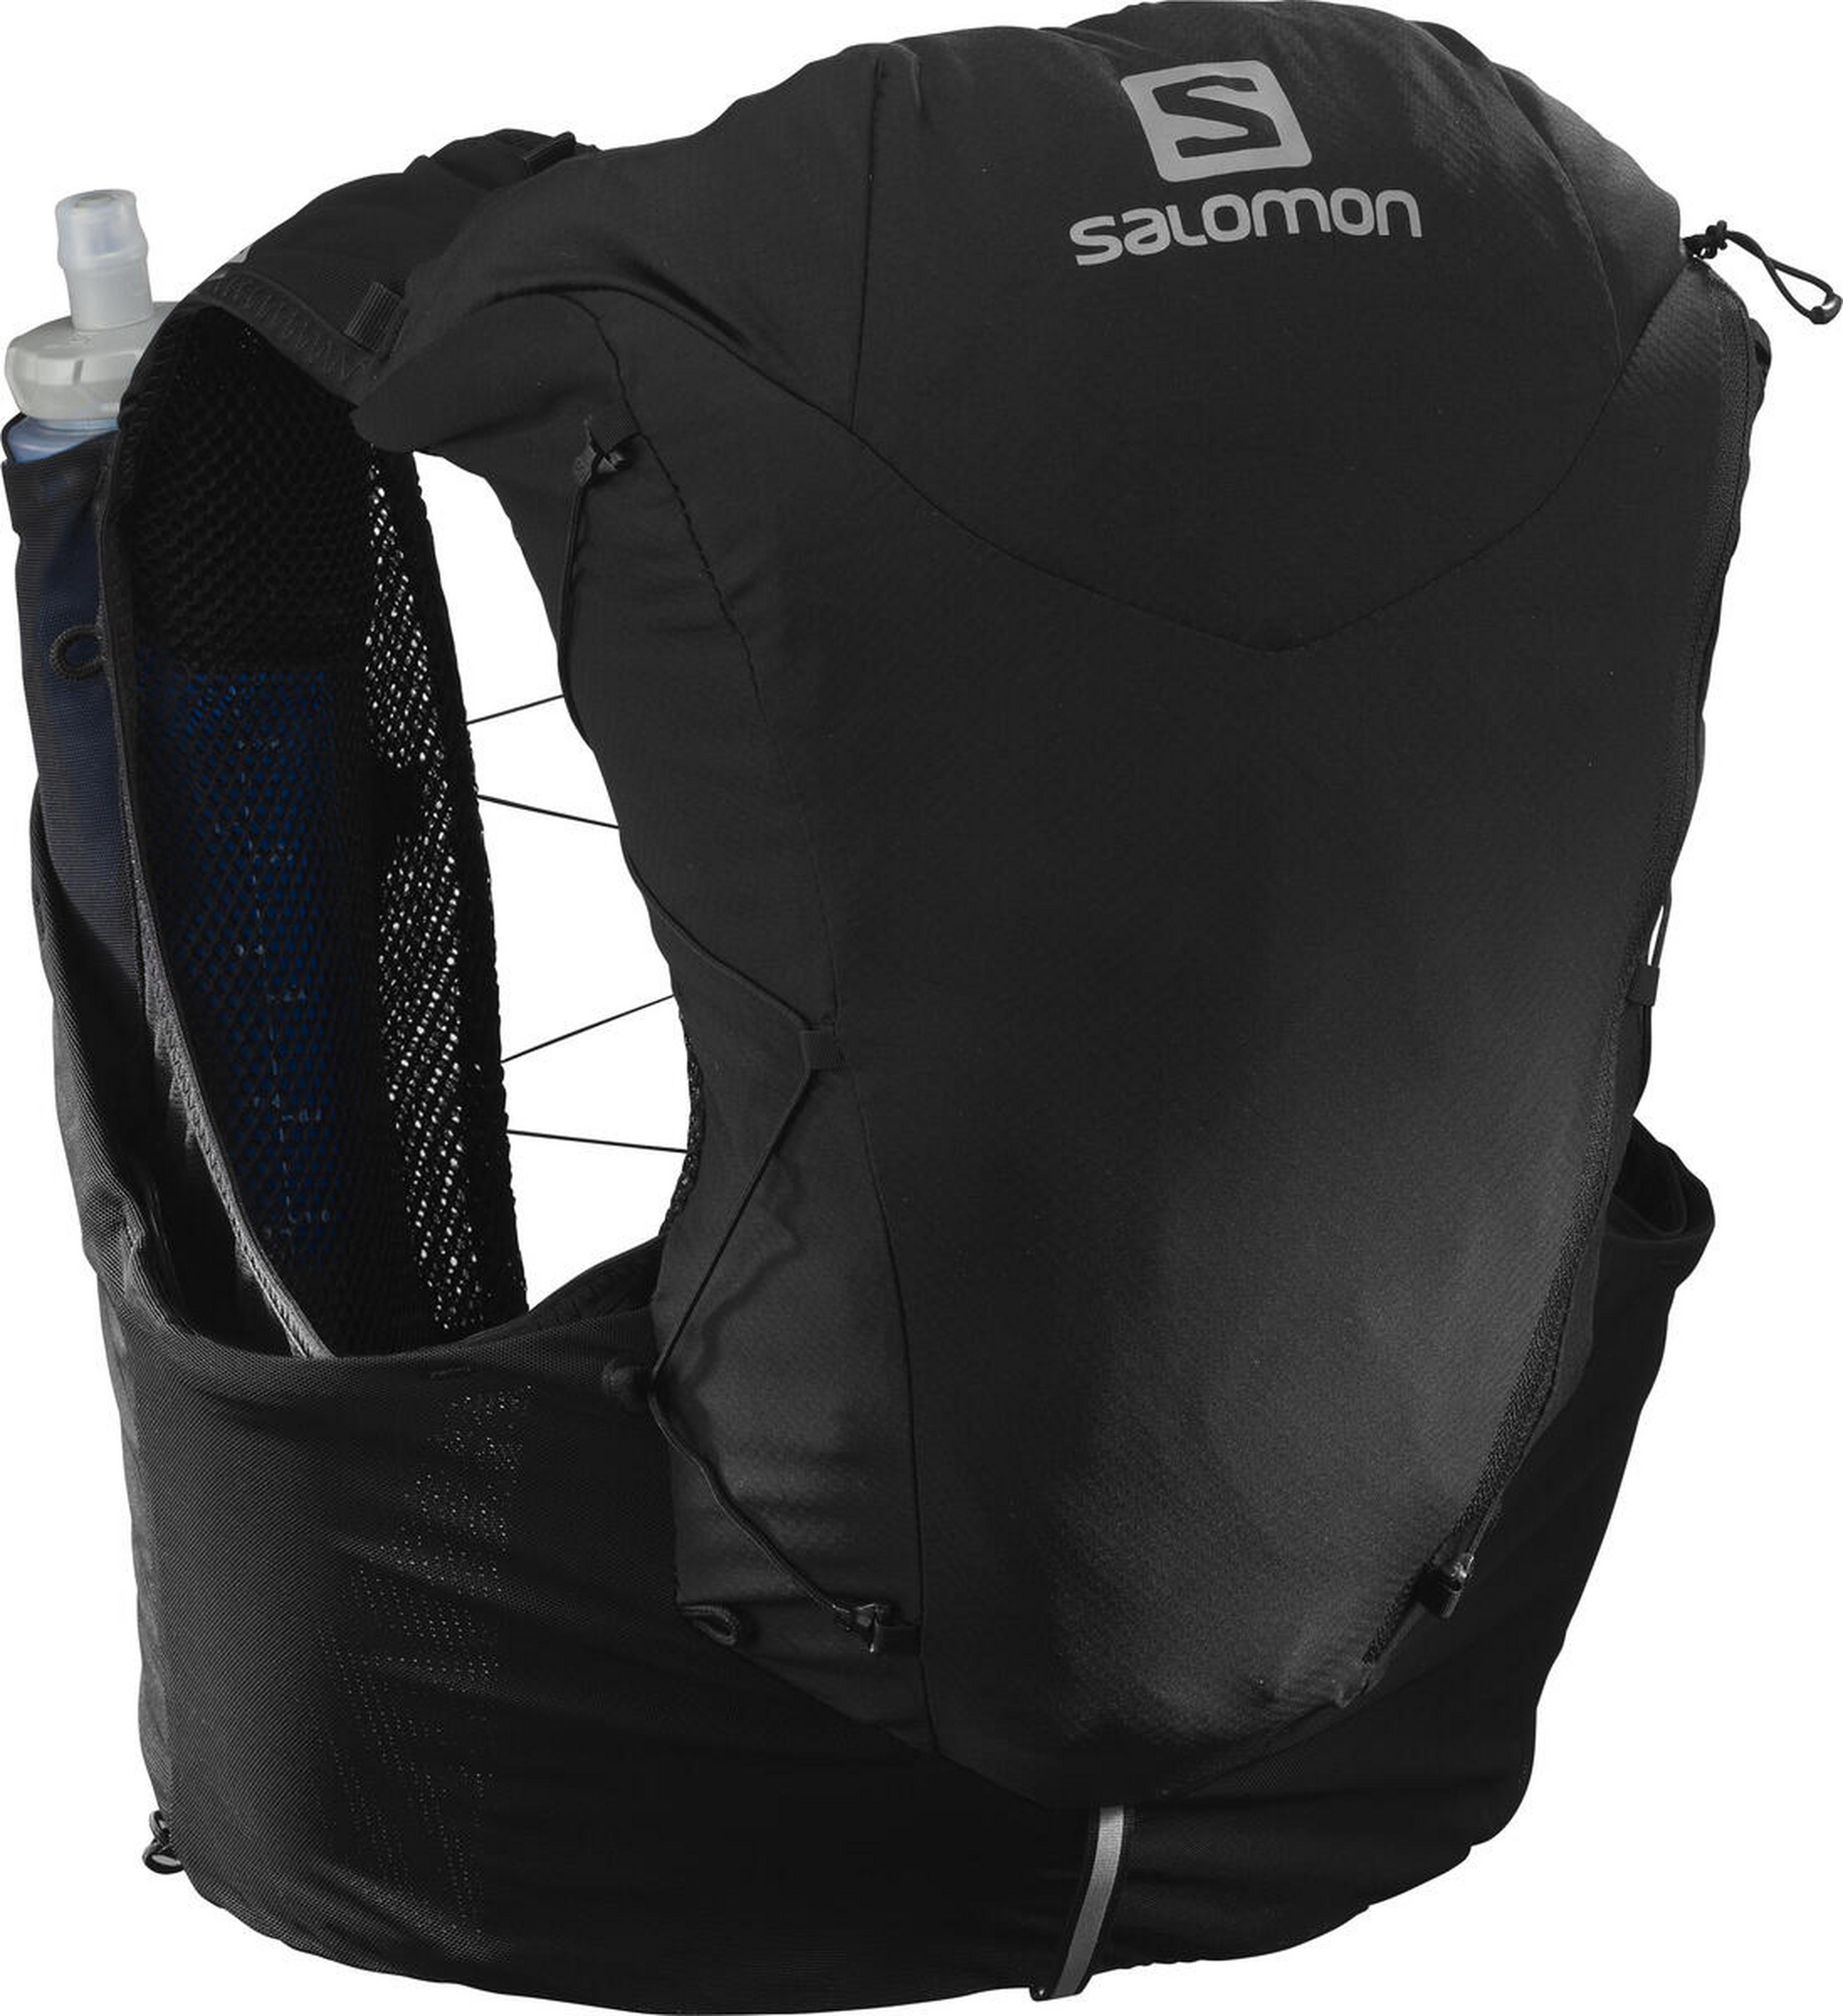  Salomon Unisex Active Skin 4 Set, Black/Ebony, L : Sports &  Outdoors